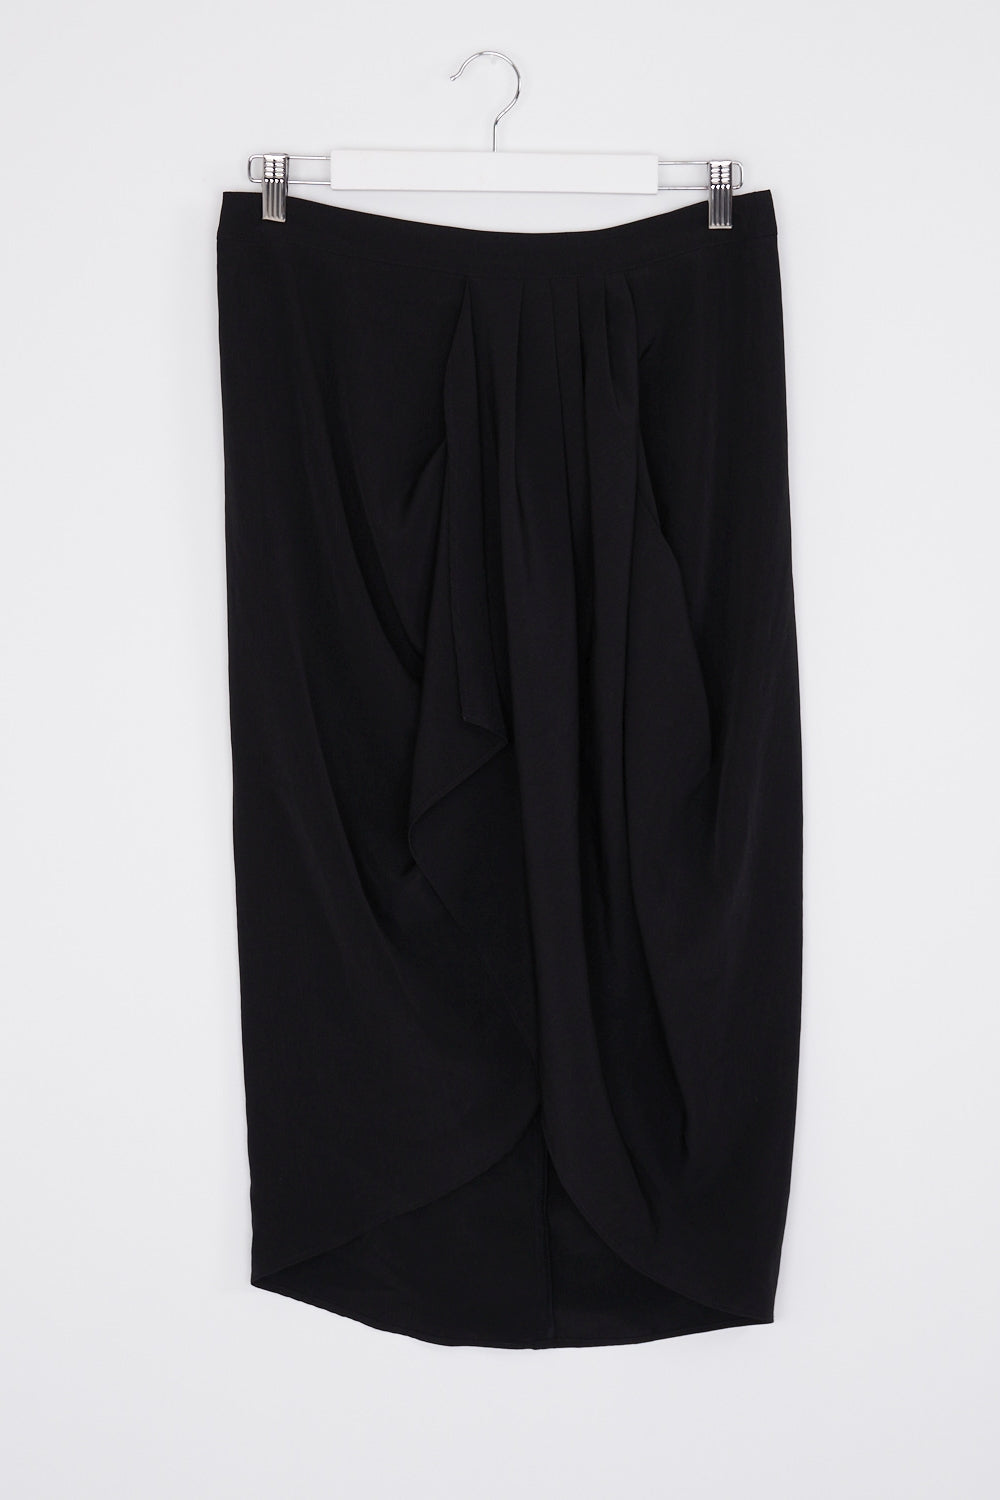 Sheike Black Pleated Front Midi Skirt 12